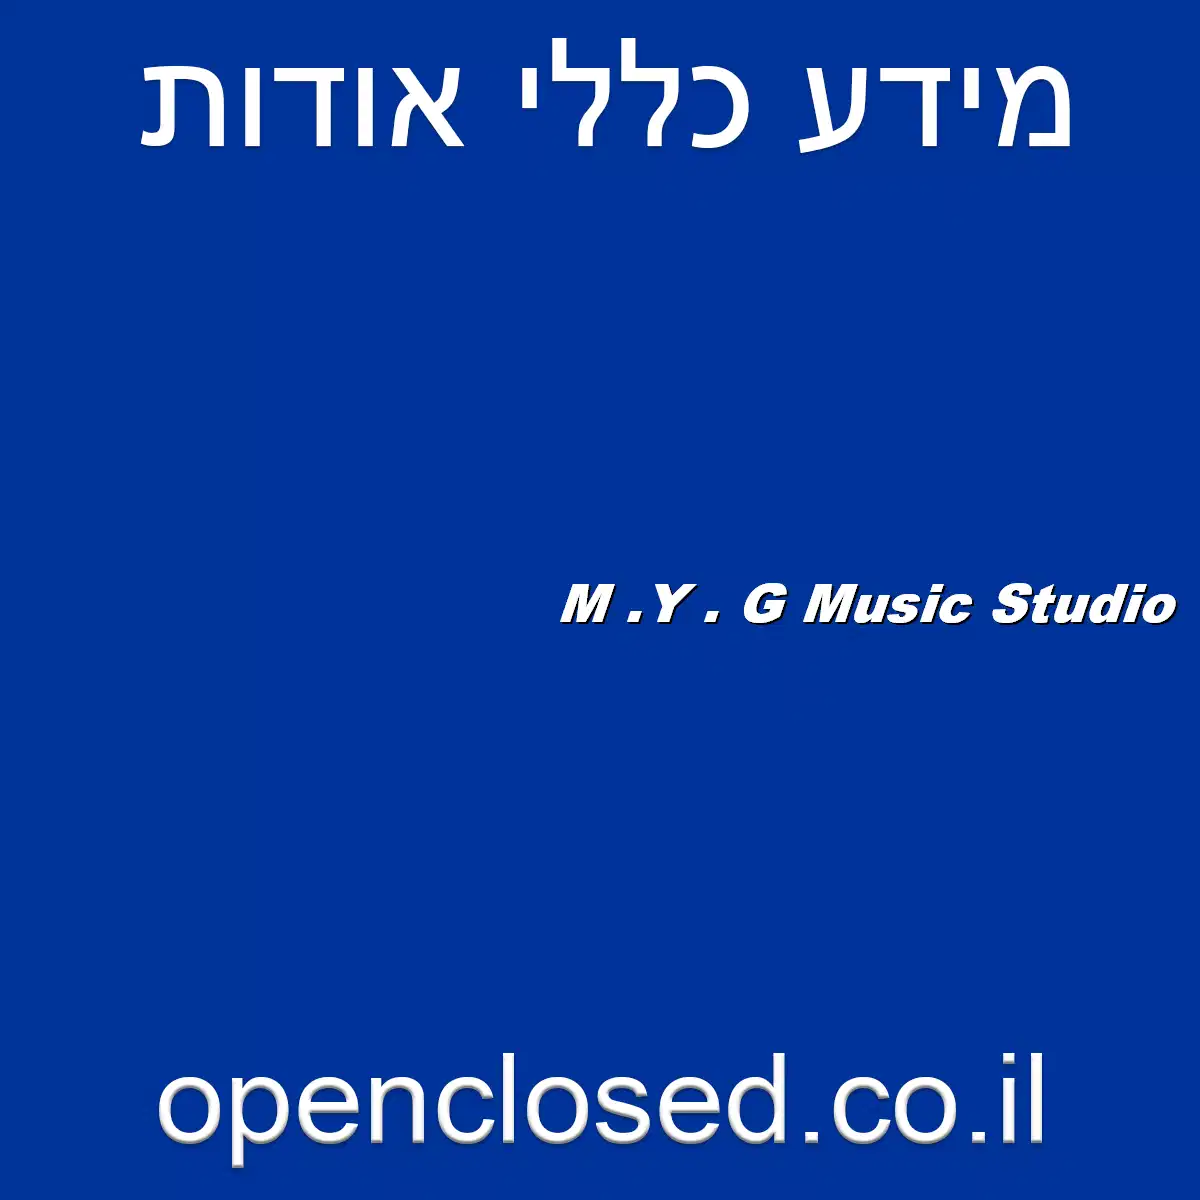 M .Y . G Music Studio